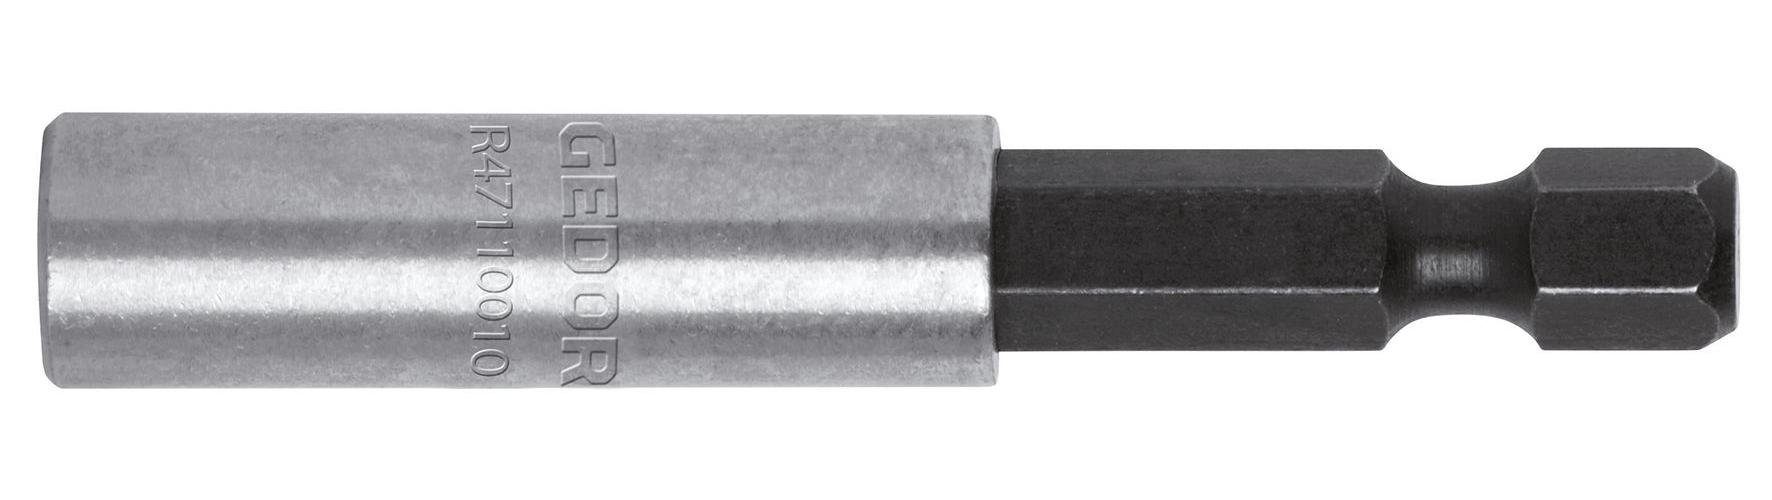 Gedore Red Ratschenringschlüssel R47110011 Bithalter 1/4 6-kant x 1/4 6-kant magnetisch 60 mm